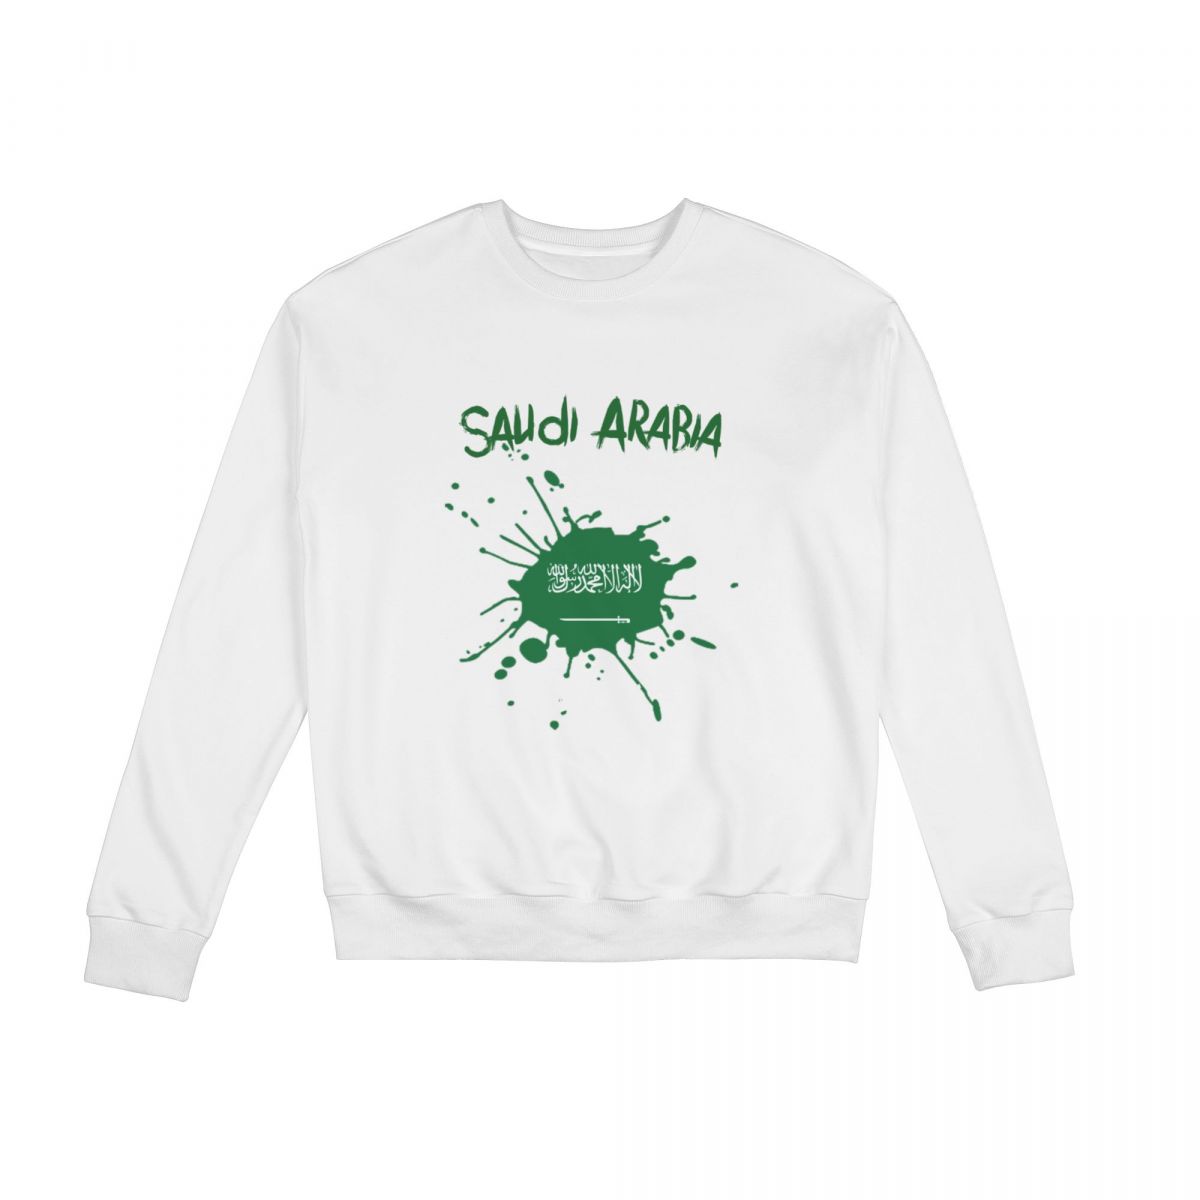 Saudi Arabia Ink Spatter Long Sleeve Sweatshirt